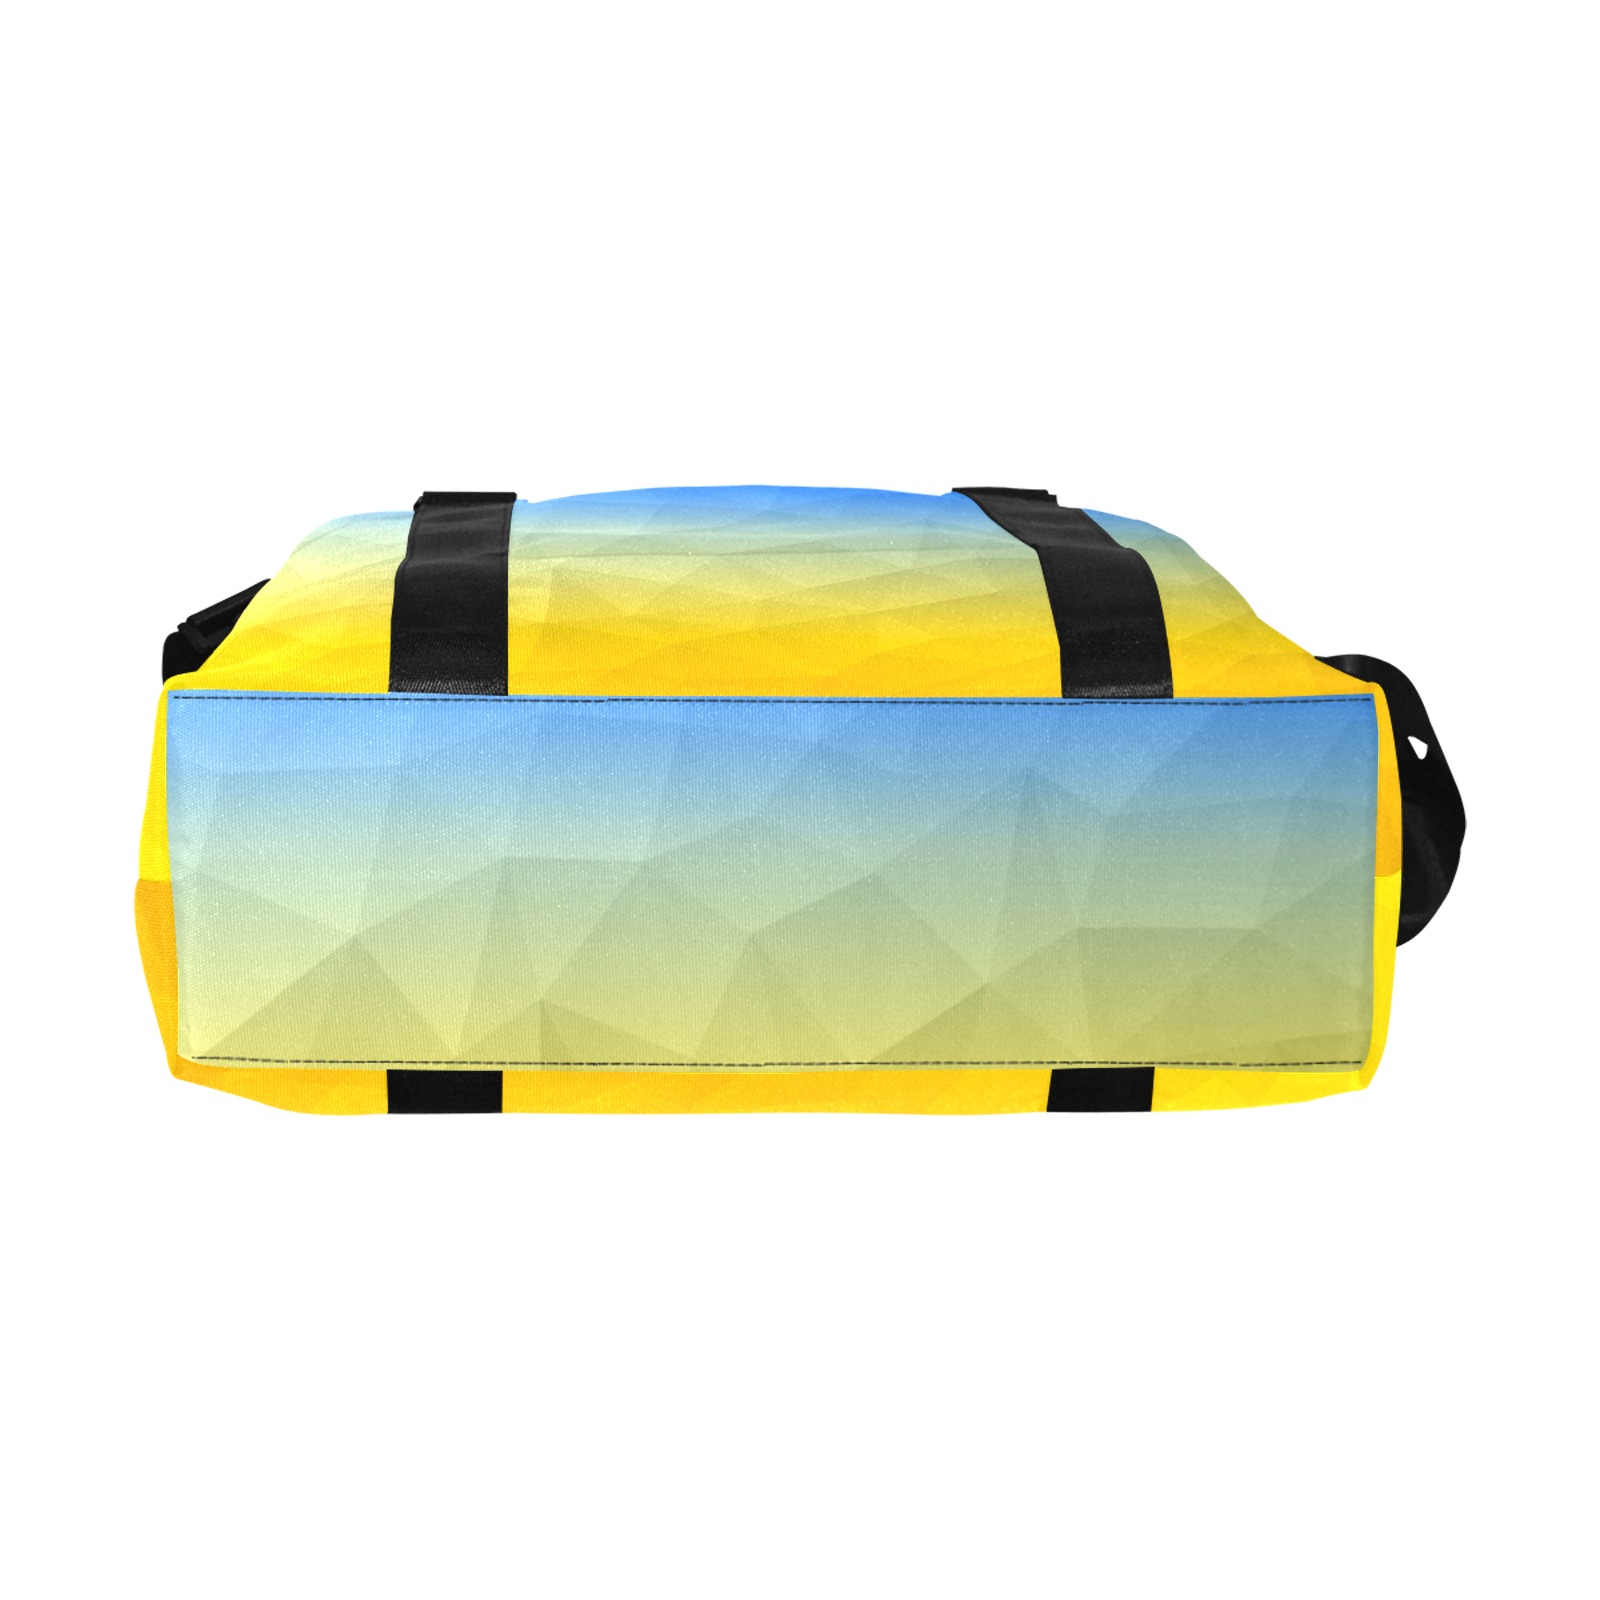 Ukraine yellow blue geometric mesh pattern Large Capacity Duffle Bag (Model 1715)